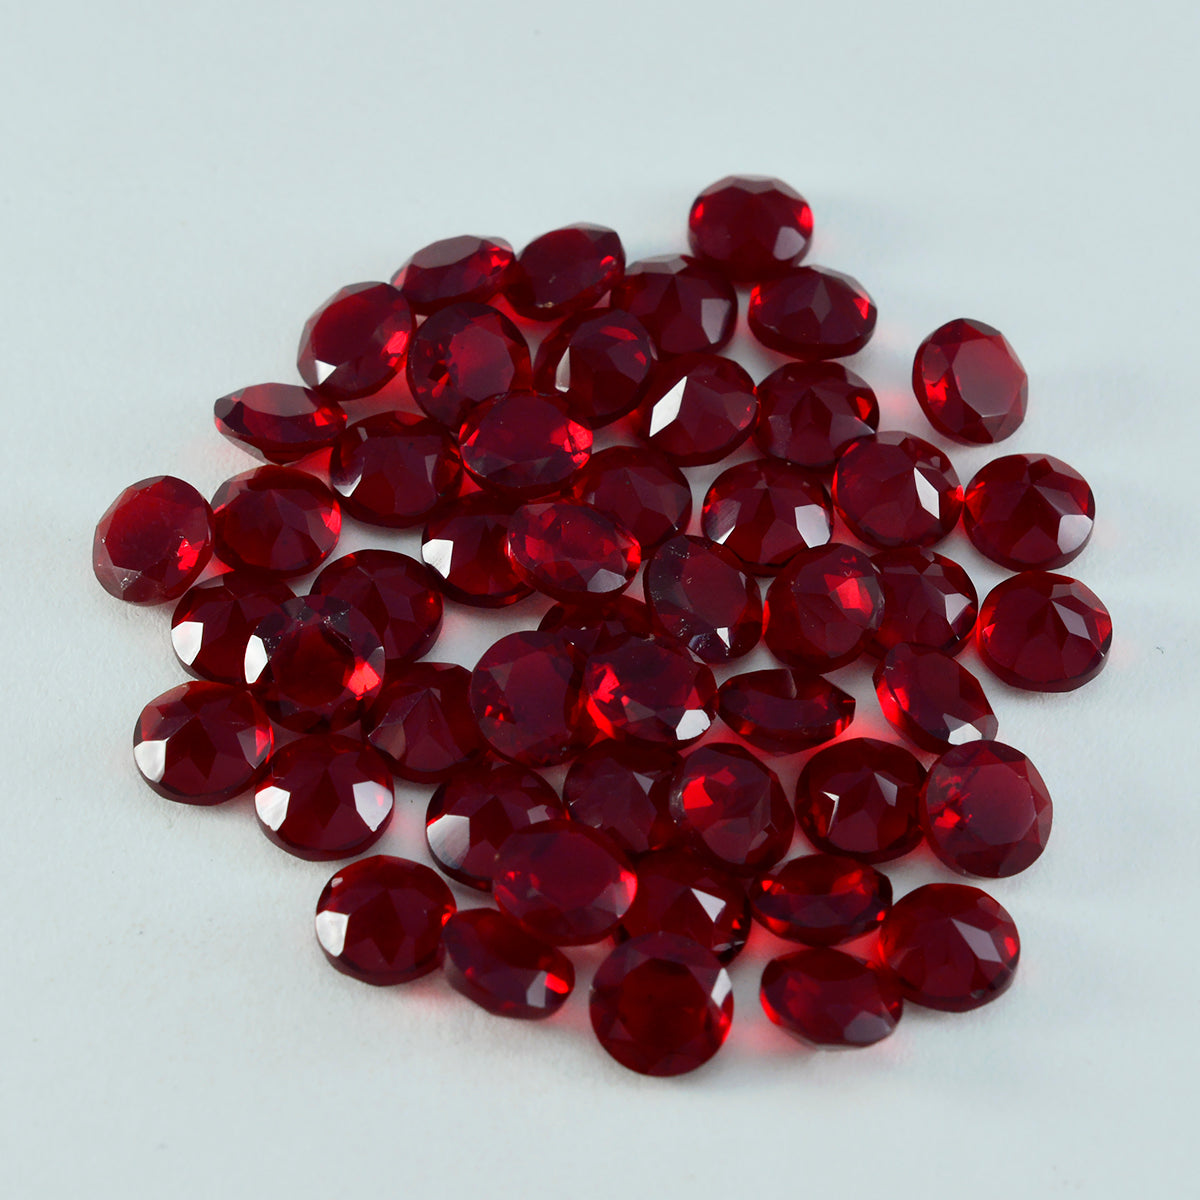 Riyogems 1PC Red Ruby CZ Faceted 5x5 mm Round Shape A1 Quality Gemstone